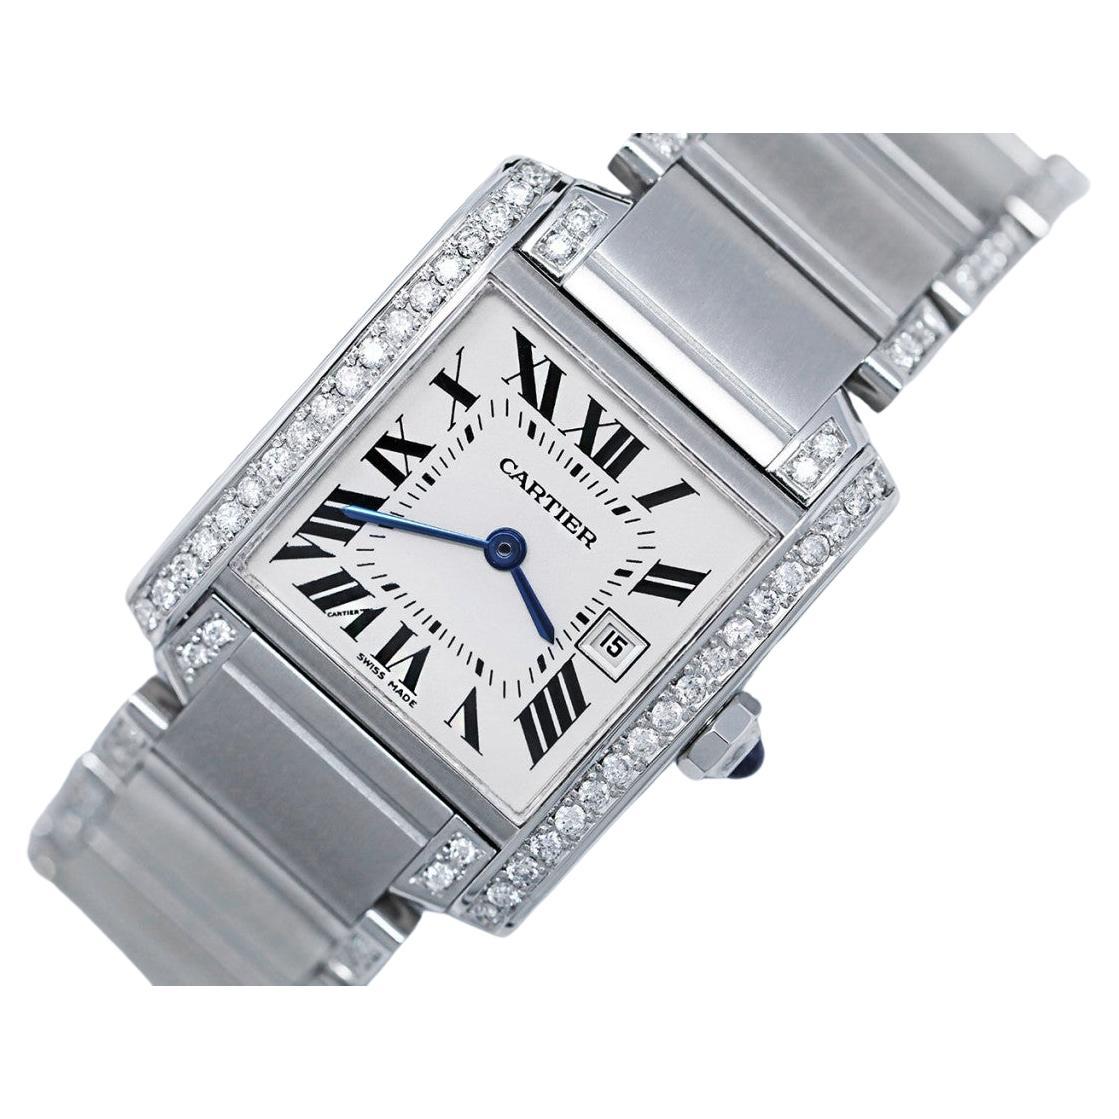 Reloj de acero Cartier Tank Francaise para señora, modelo mediano personalizado con diamantes nº 2465